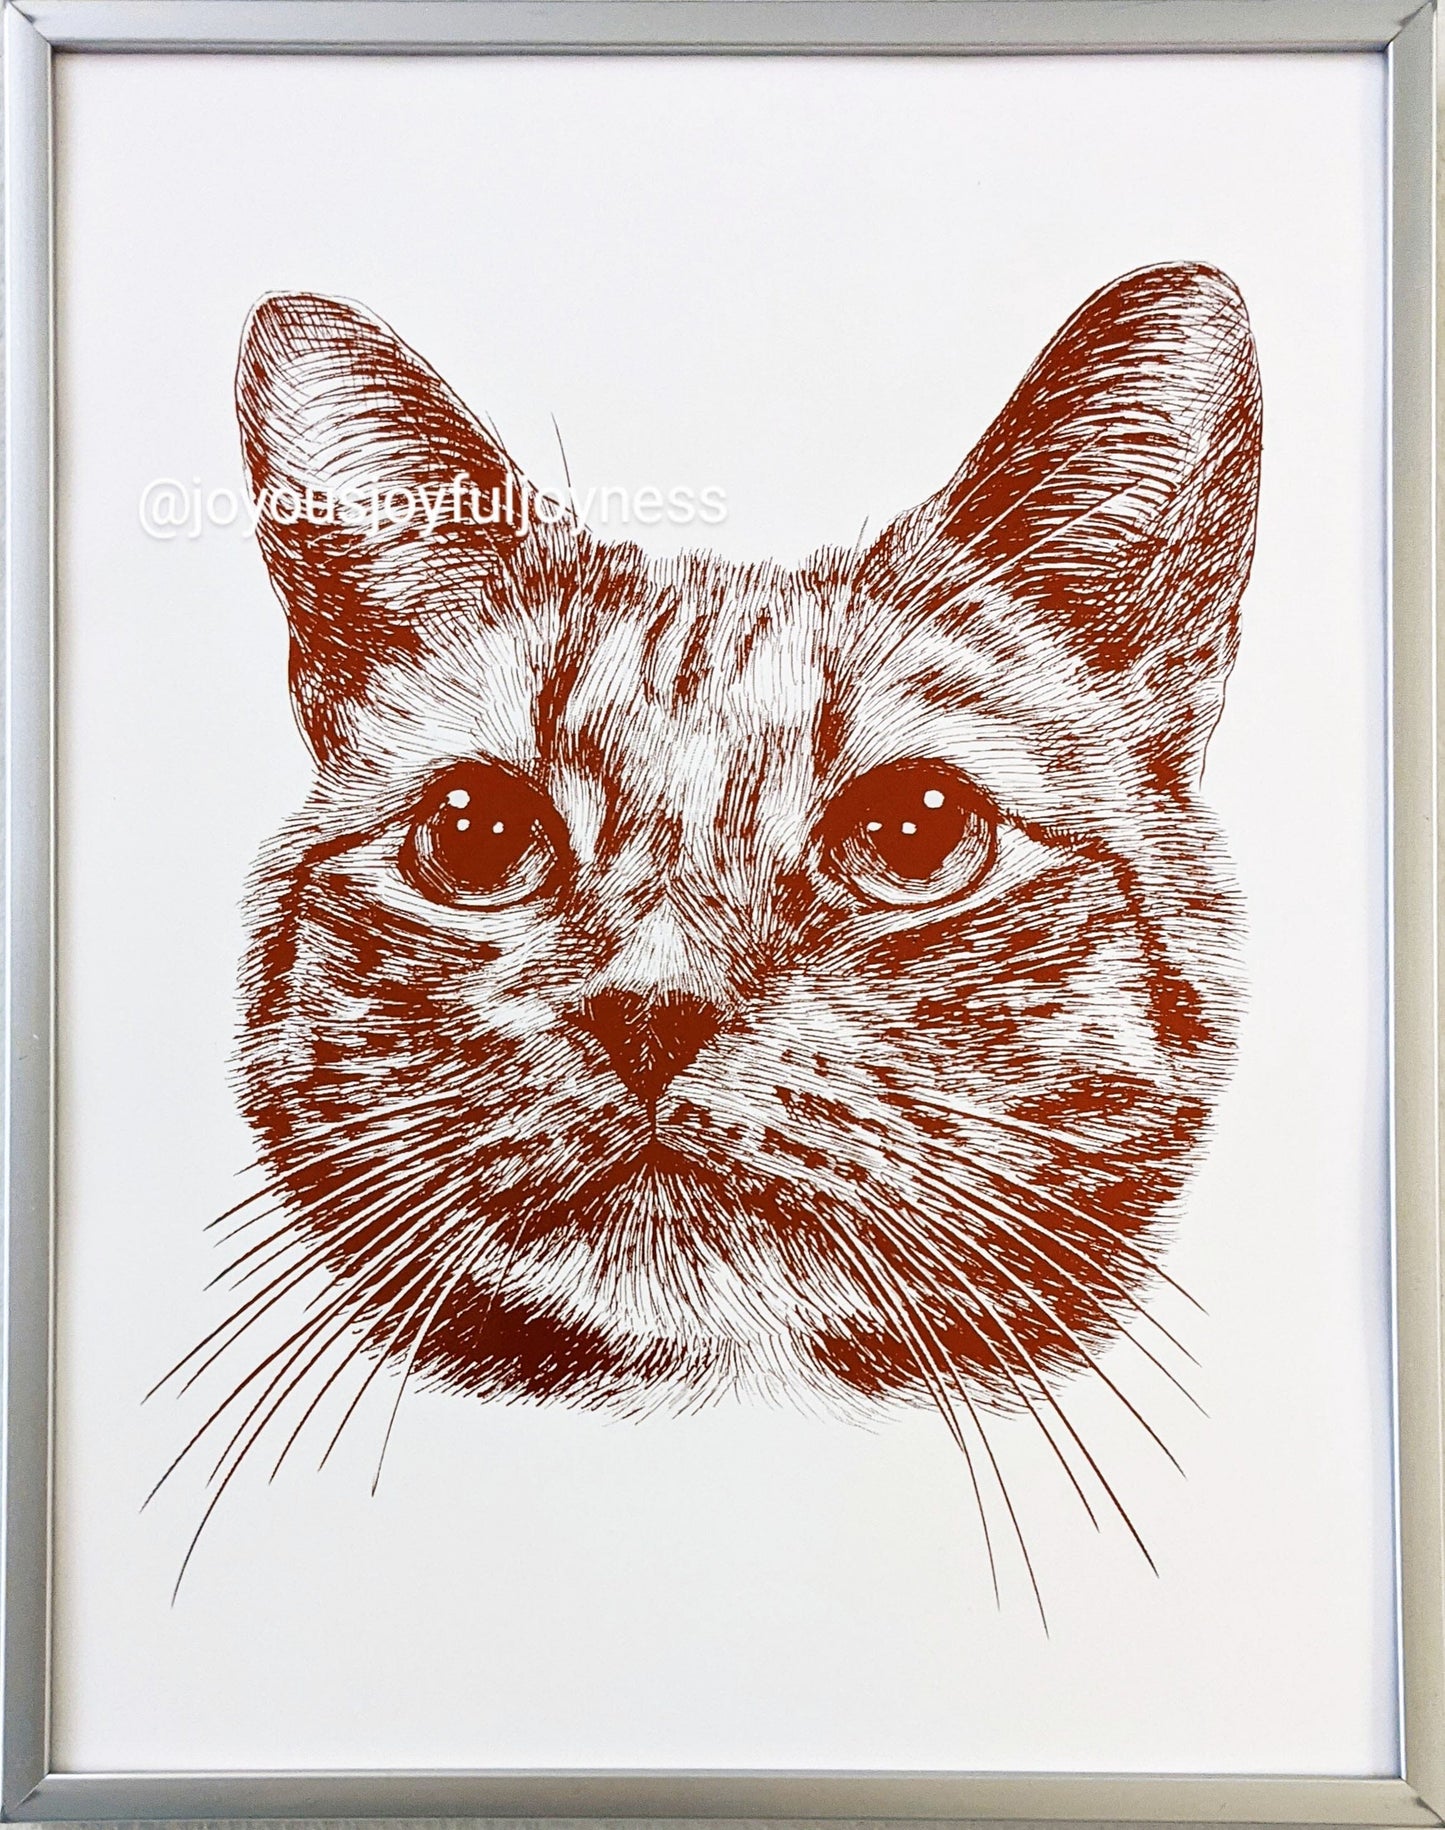 Custom Drawings Of Kittens Posters, Prints, & Visual Artwork JoyousJoyfulJoyness 